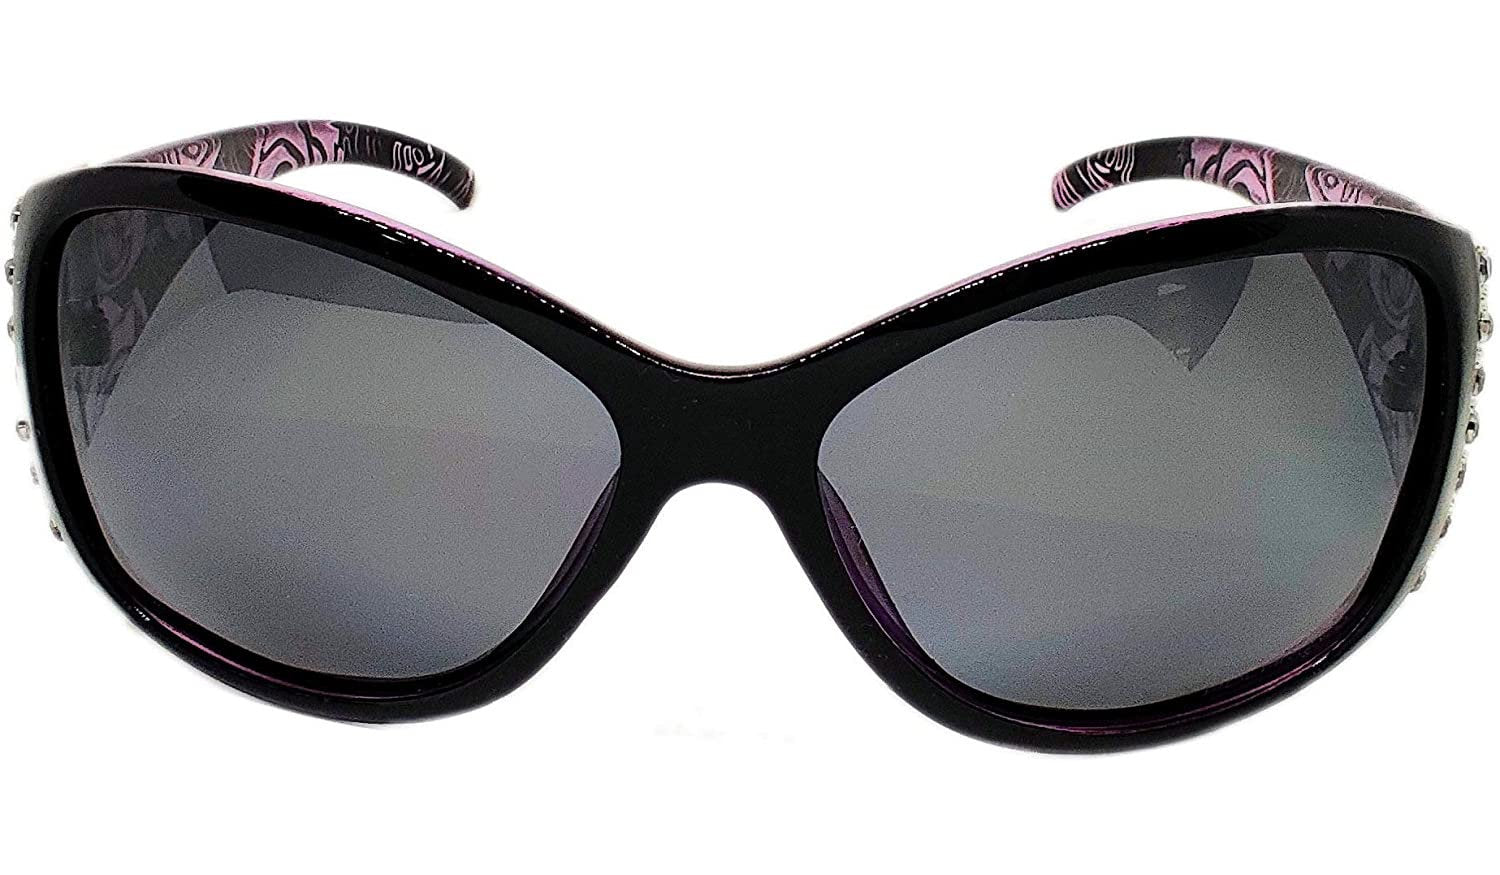 Third image: Polarized Sunglasses for Women - Premium Fashion Sunglasses - HZ Series Lule Womens Designer Sunglasses